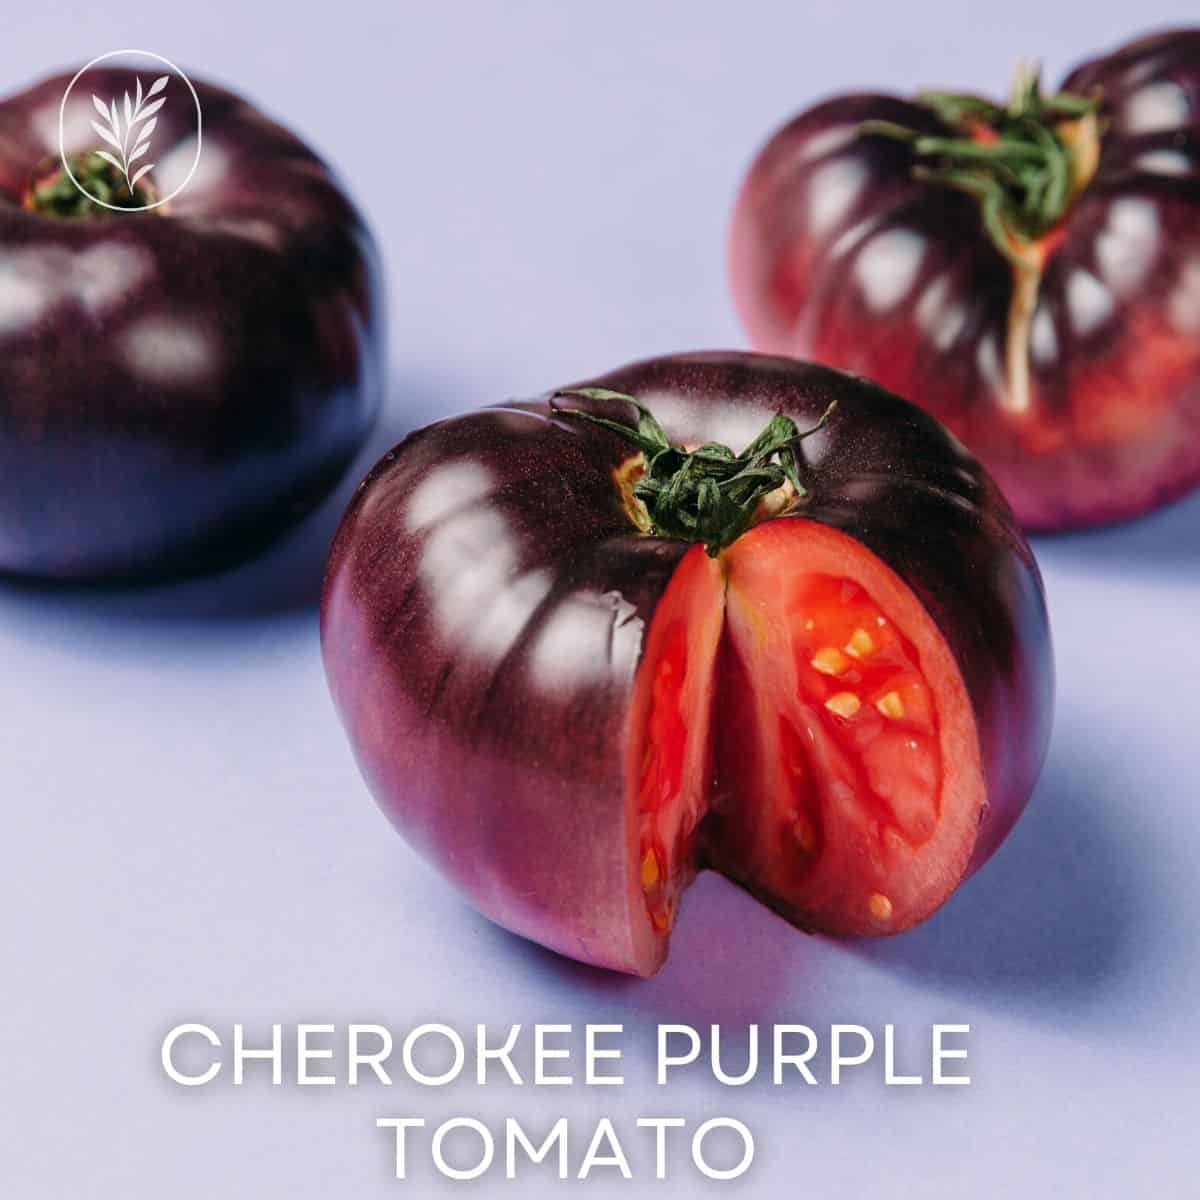 Cherokee purple tomato via @home4theharvest